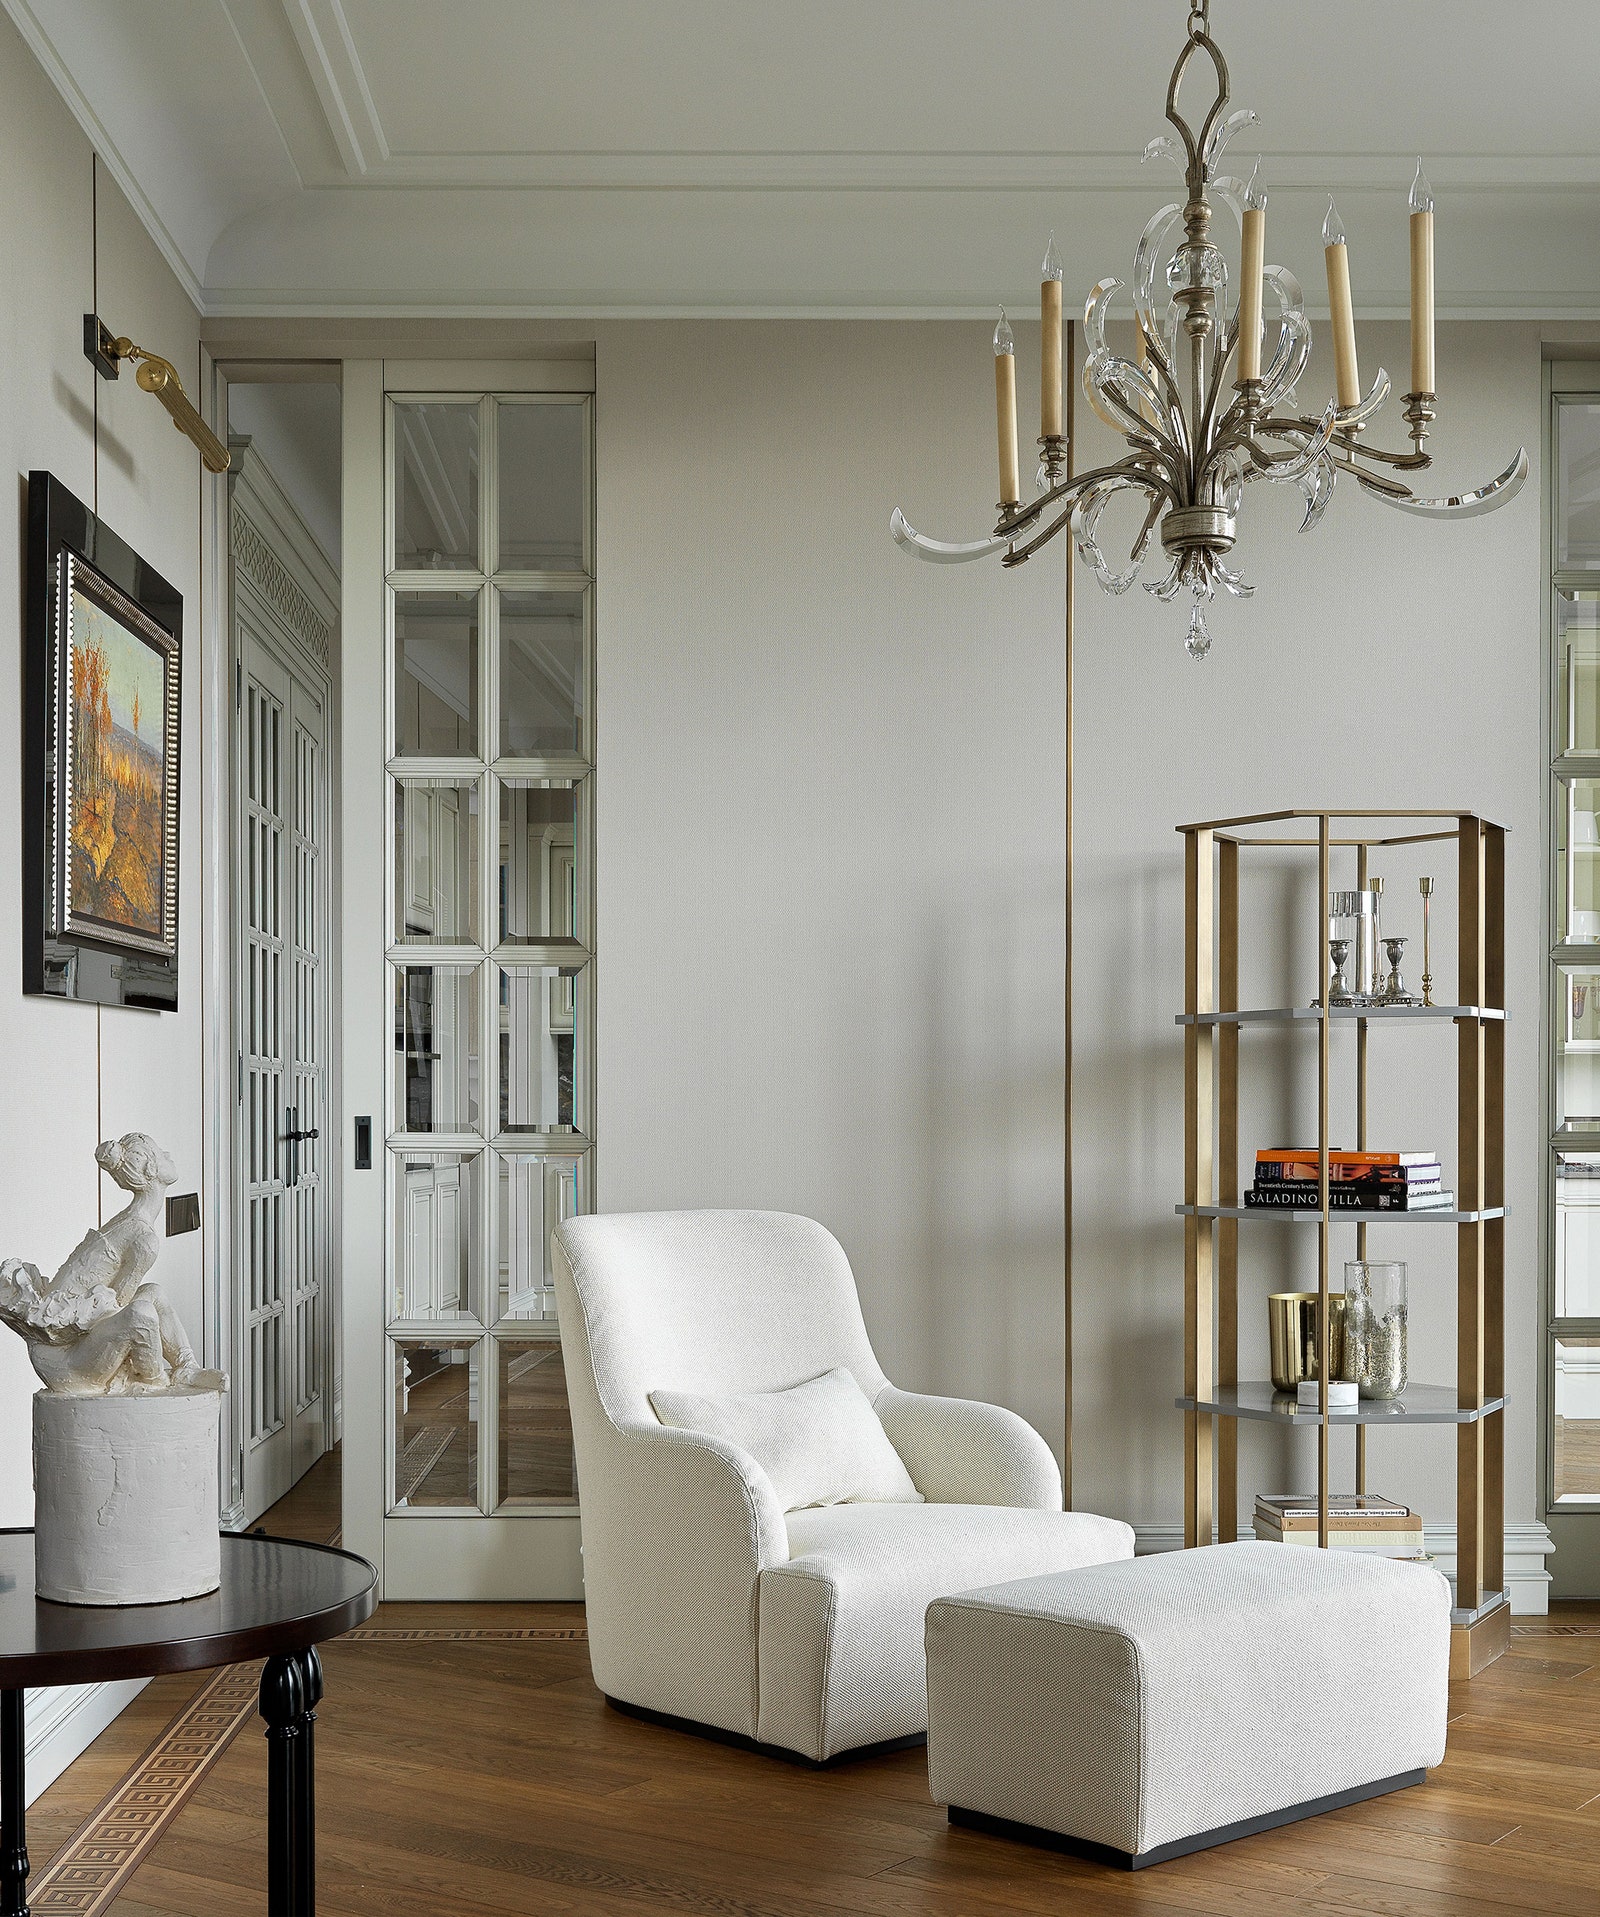 Фрагмент гостиной. Кресло и этажерка Meridiani картины из коллекции хозяина квартиры.